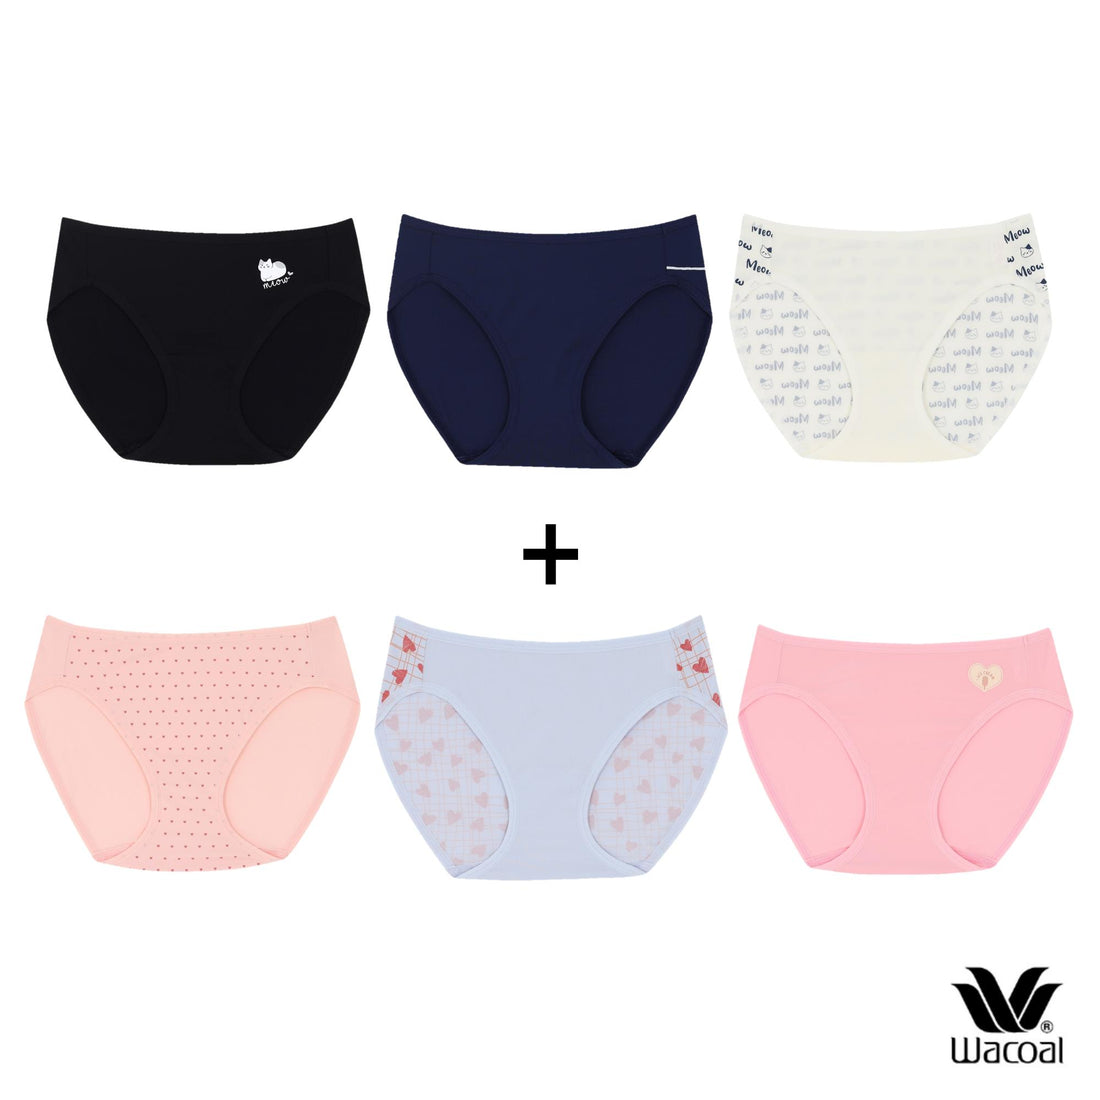 Wacoal Panty Fashion, bikini style underwear, 1 Set of 3 pieces, model WU2C04 (buy 1 set get 1 set free)